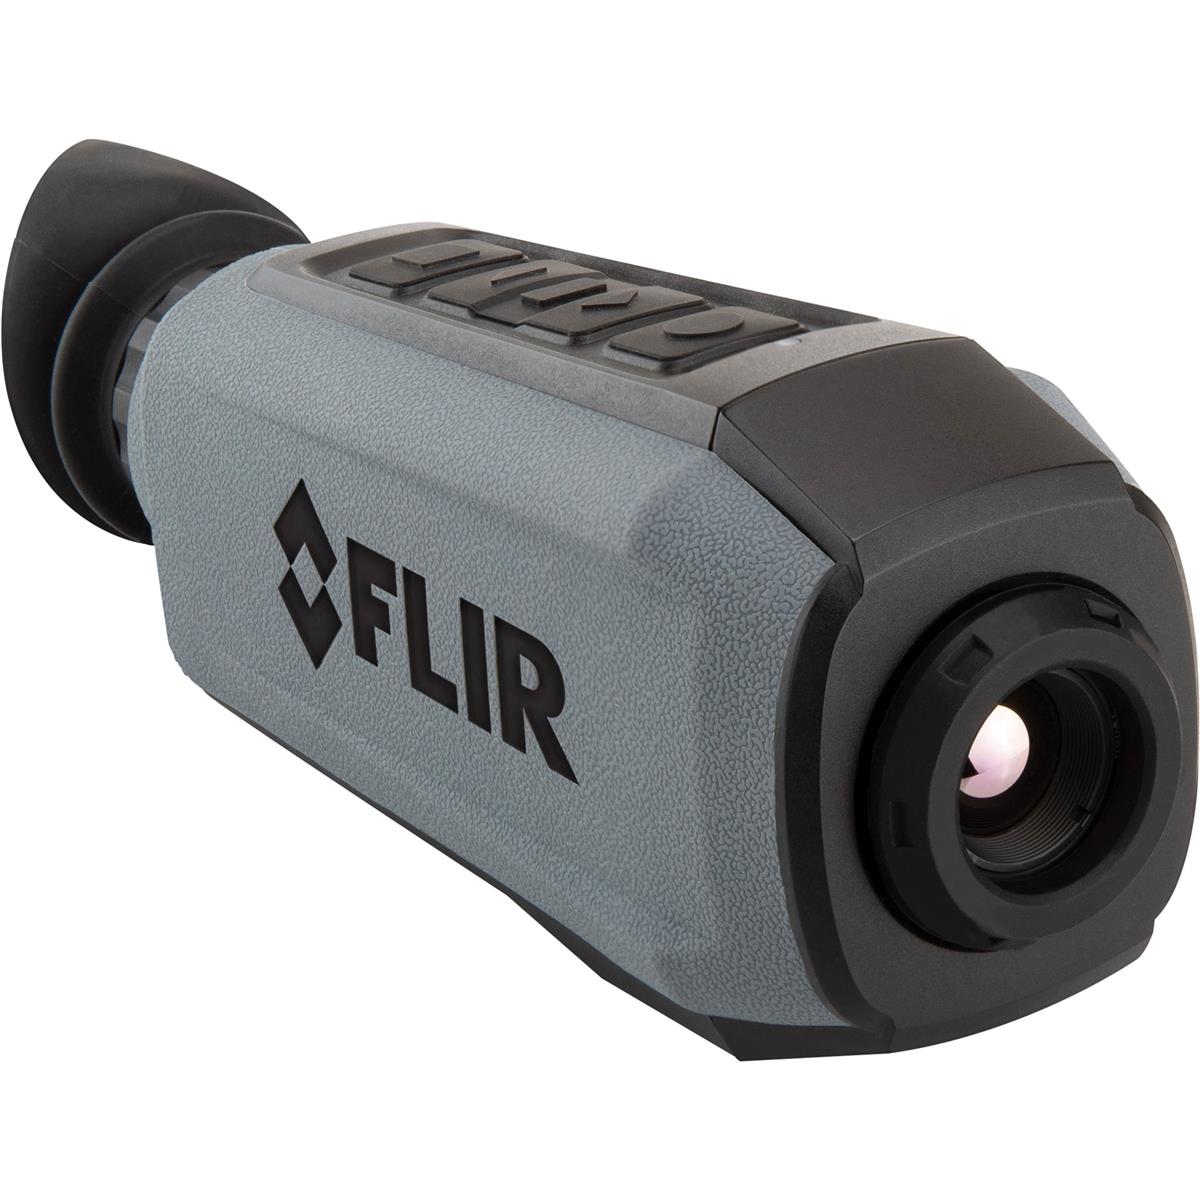 FLIR Scion OTM260 1x 18mm Lens 9Hz Thermal Imaging Monocular $1499 + free s/h